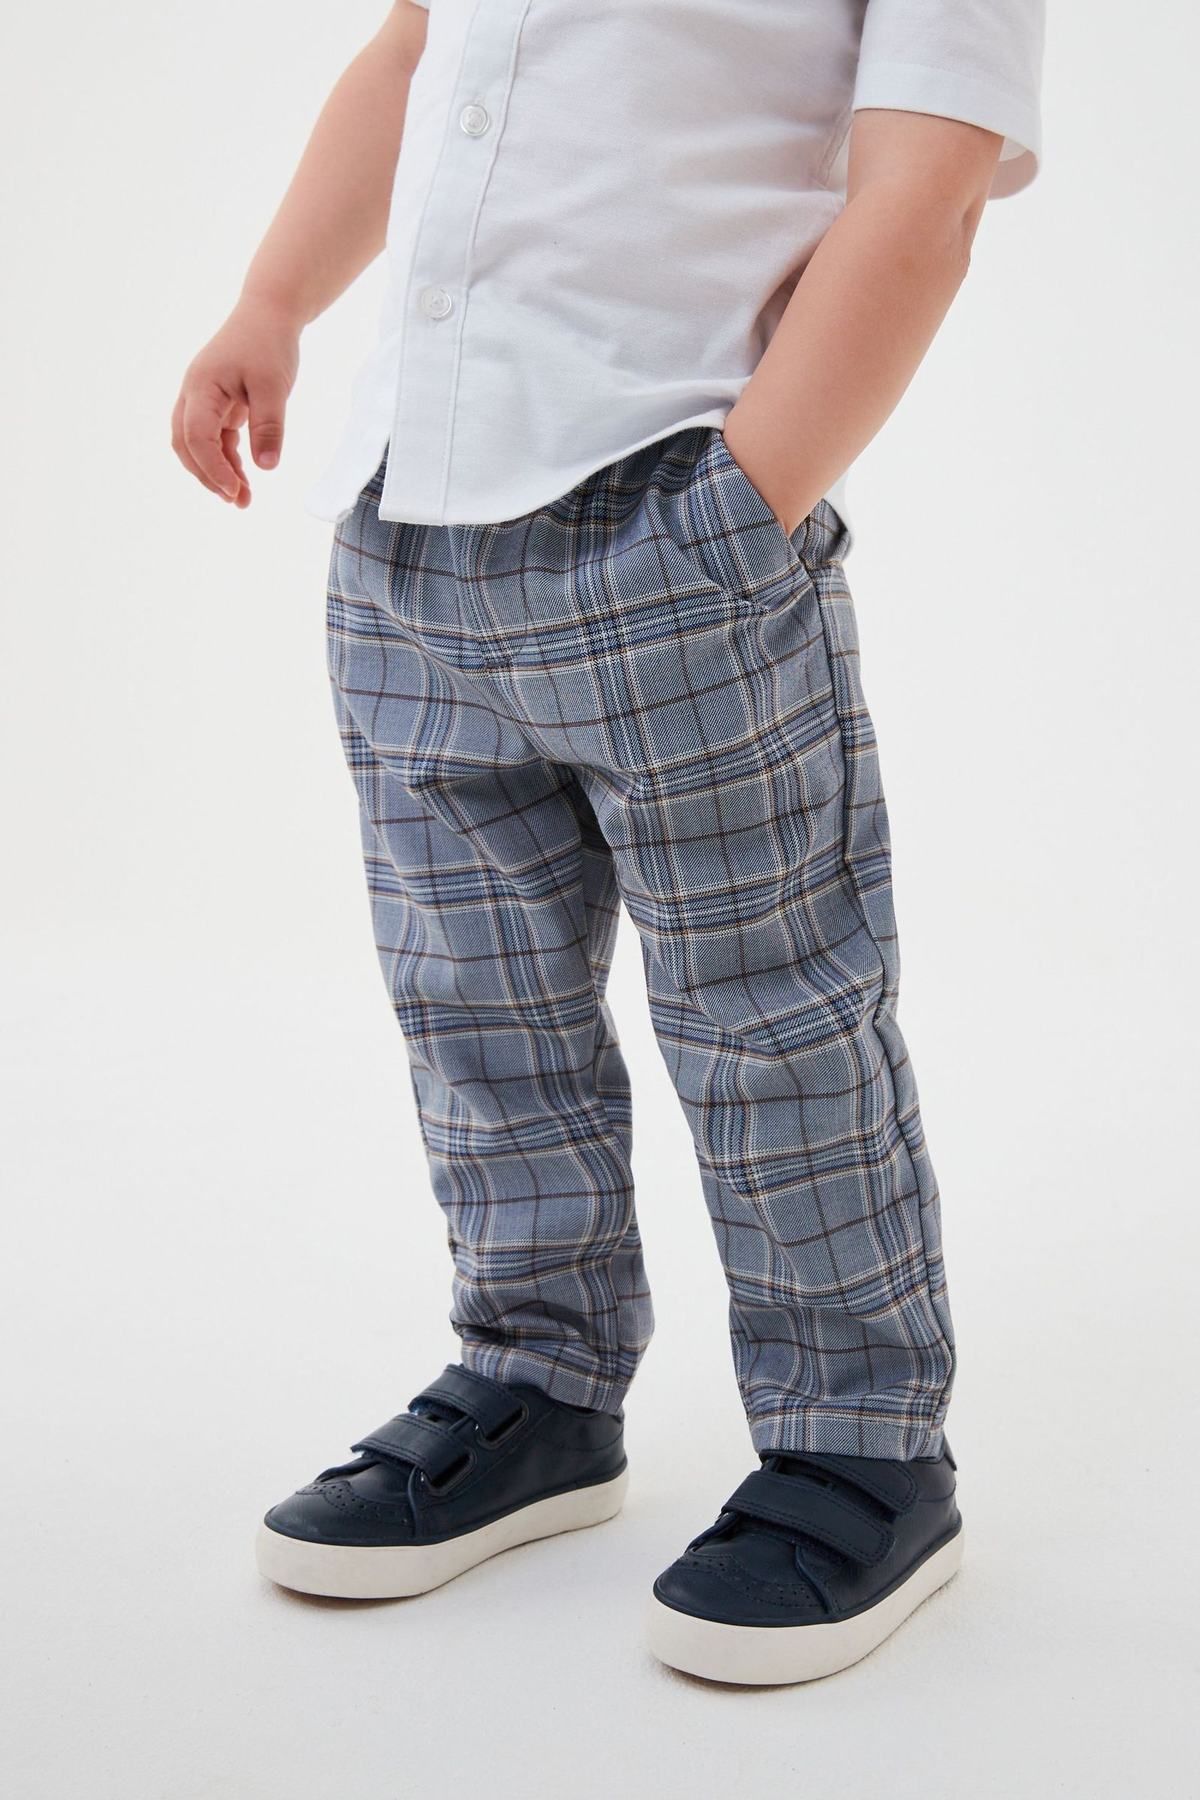 Boys Check Cotton School Uniform Trouser, Size: Medium at Rs 250/piece in  Modinagar